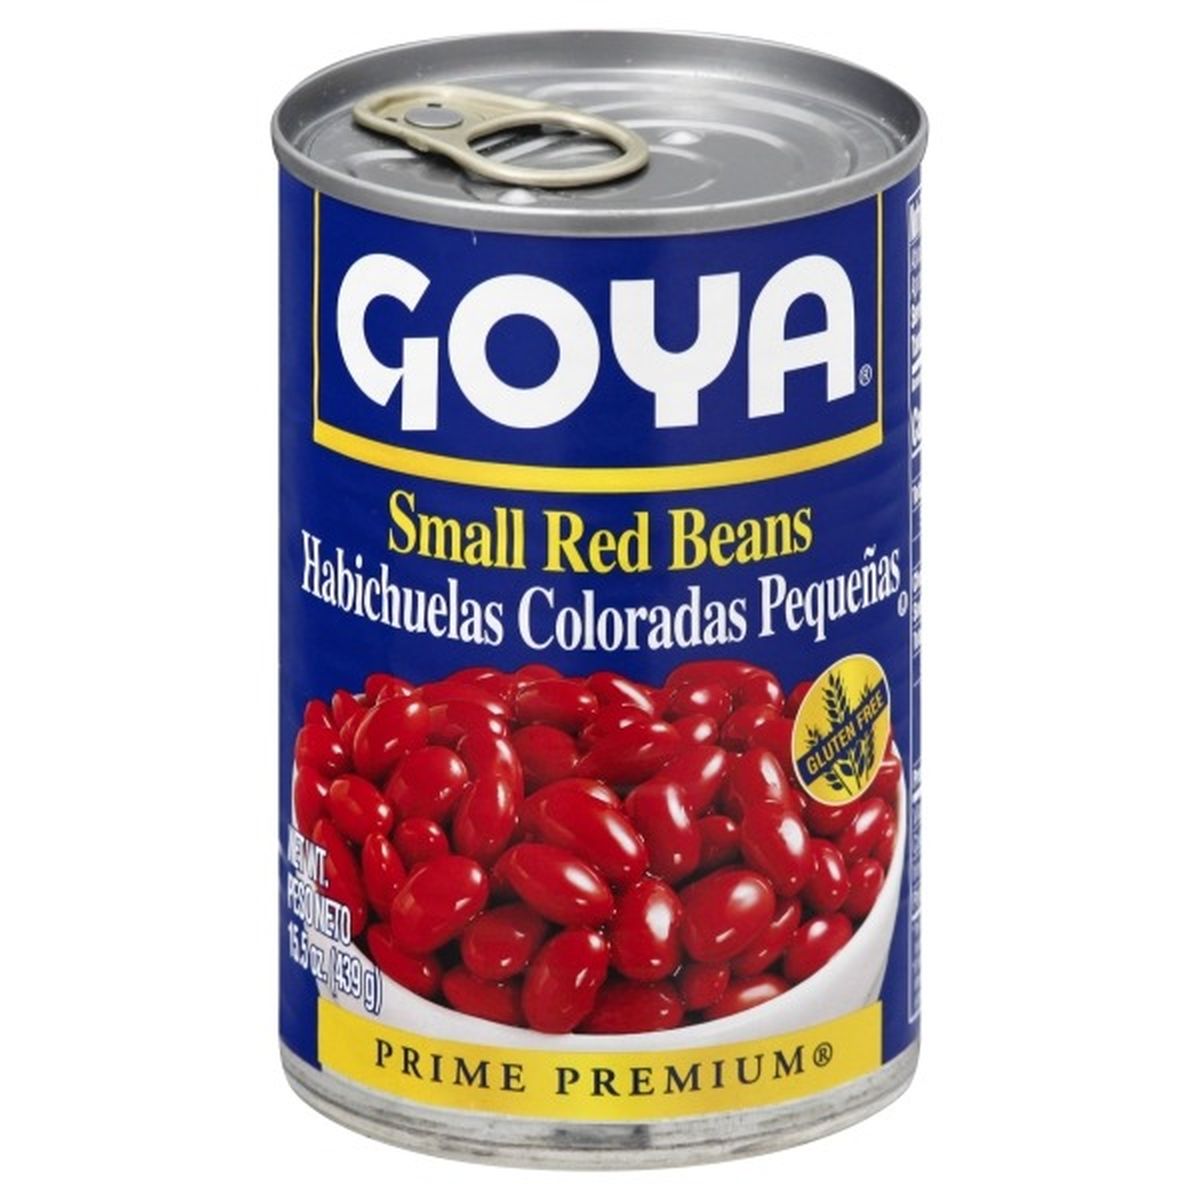 Calories in Goya Small Red Beans, Prime Premium